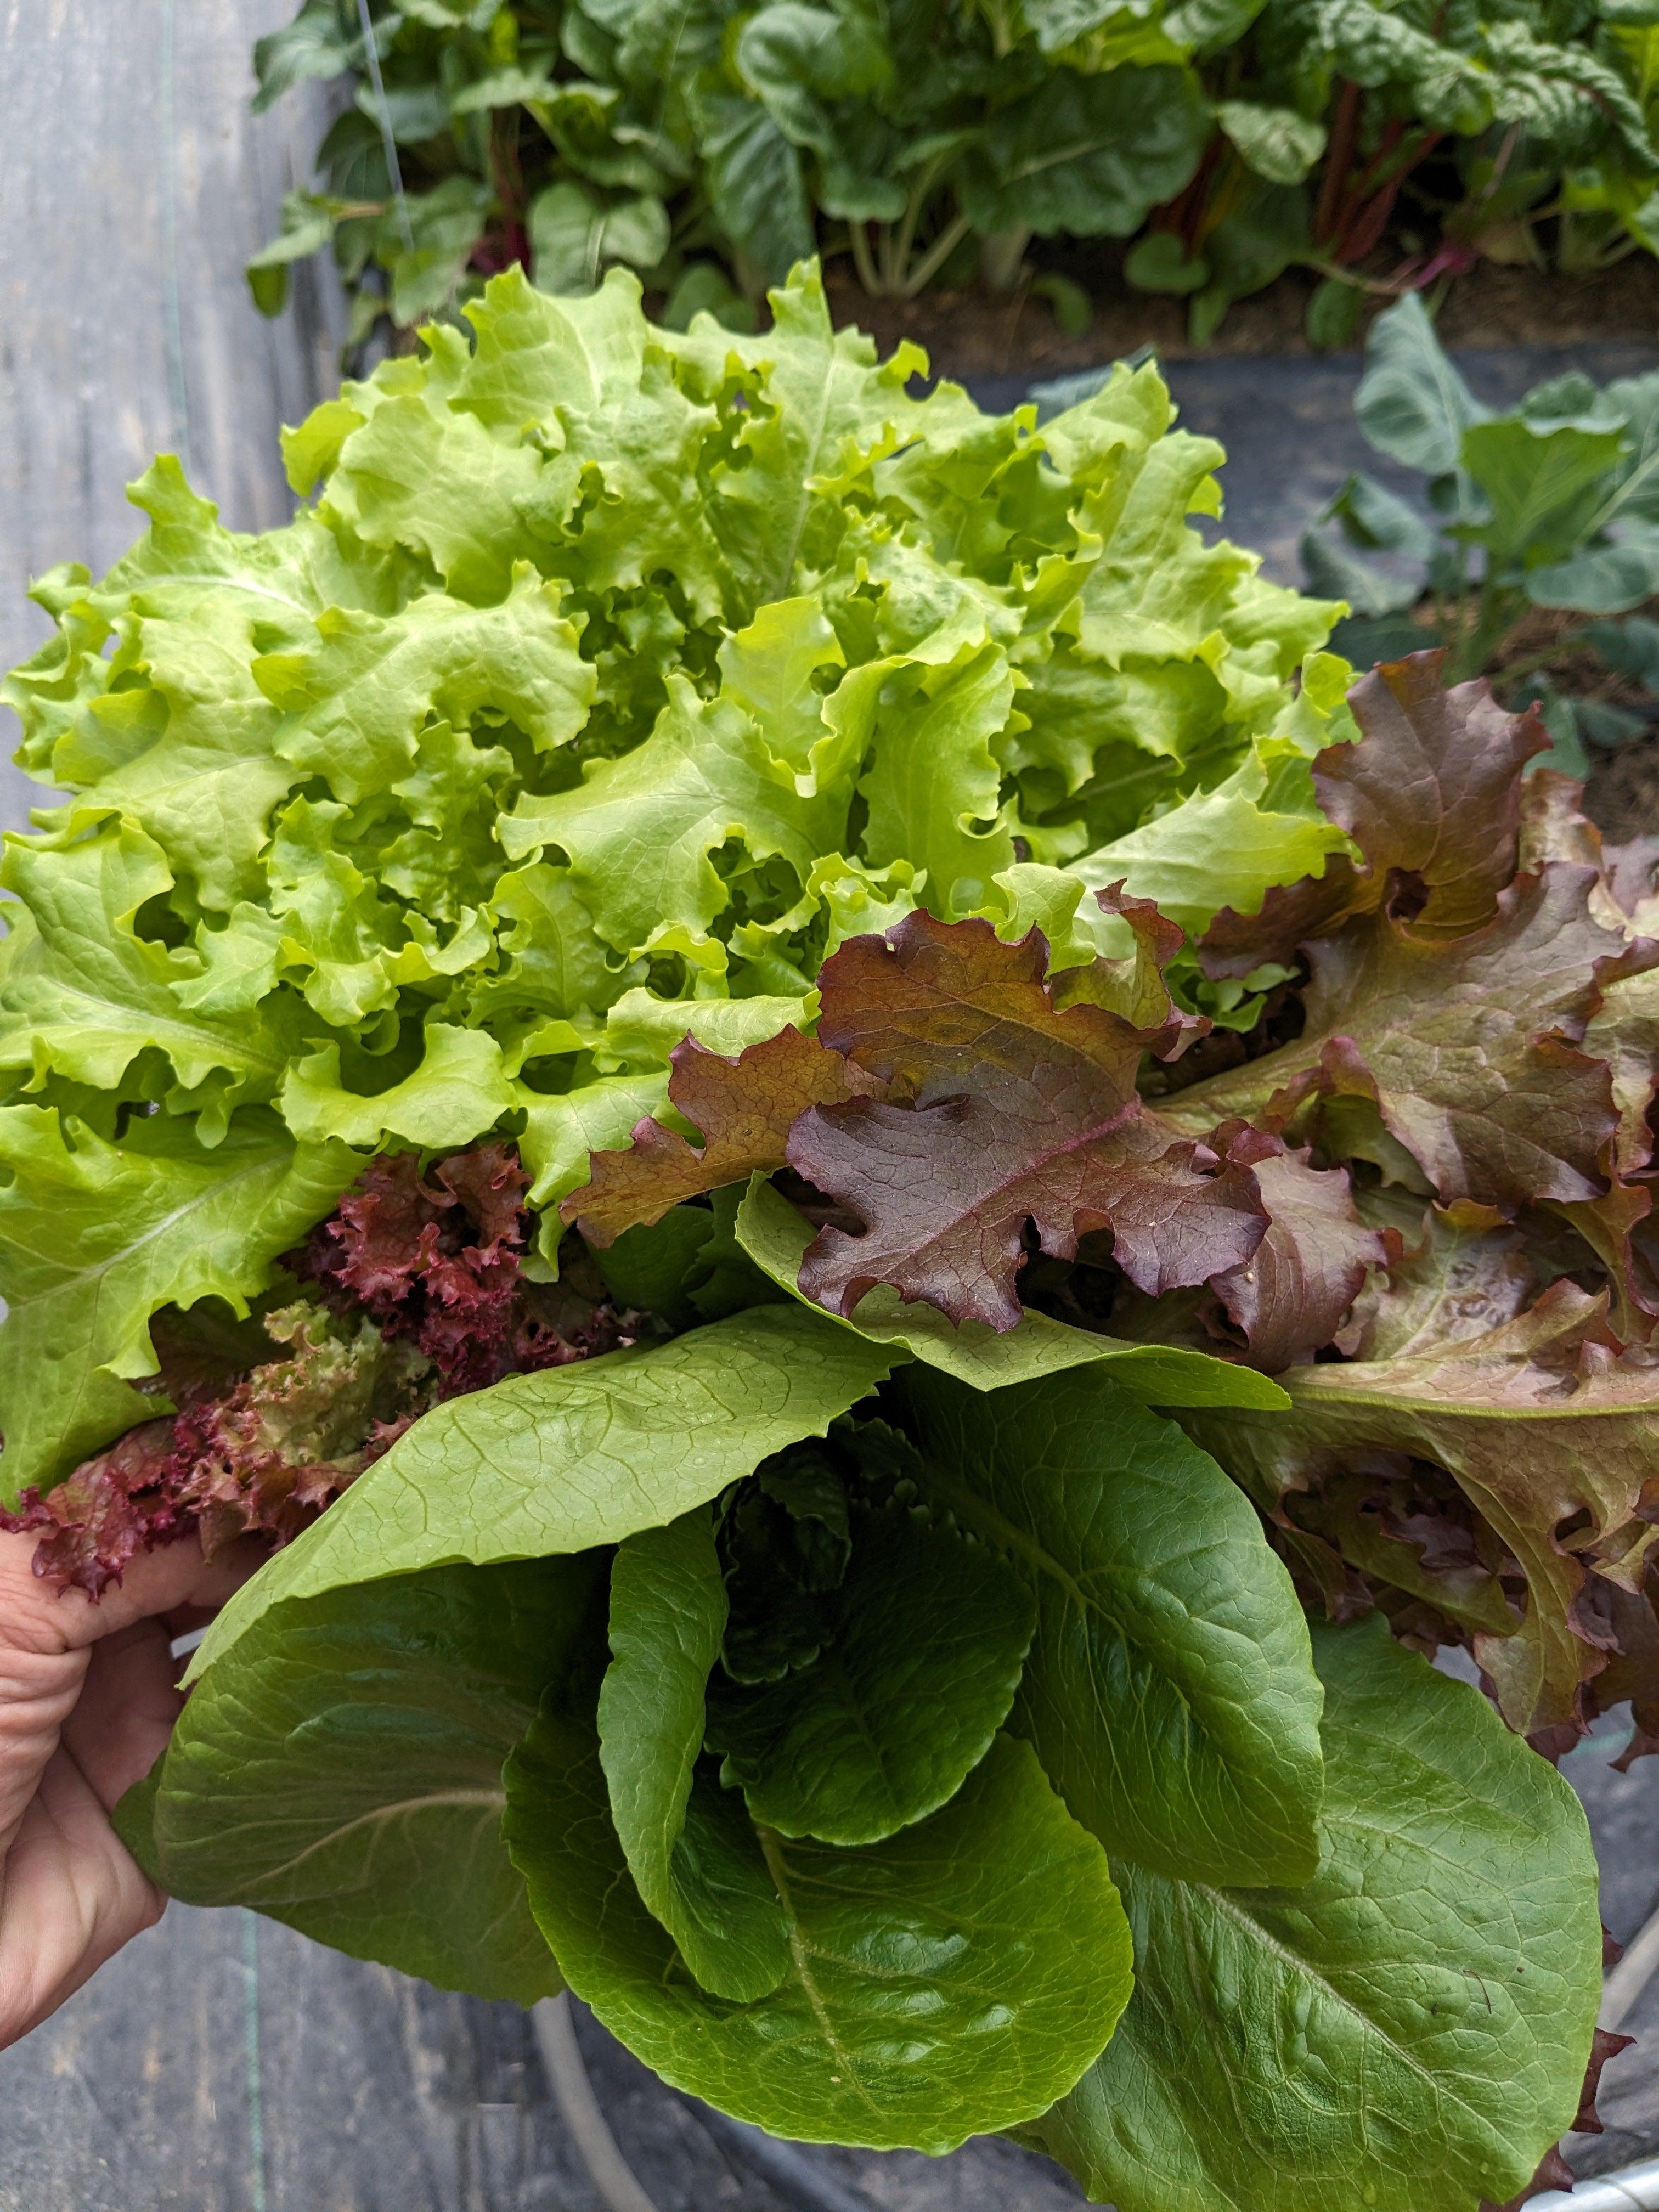 Soil-Grown Lettuce - Nutrient Farm